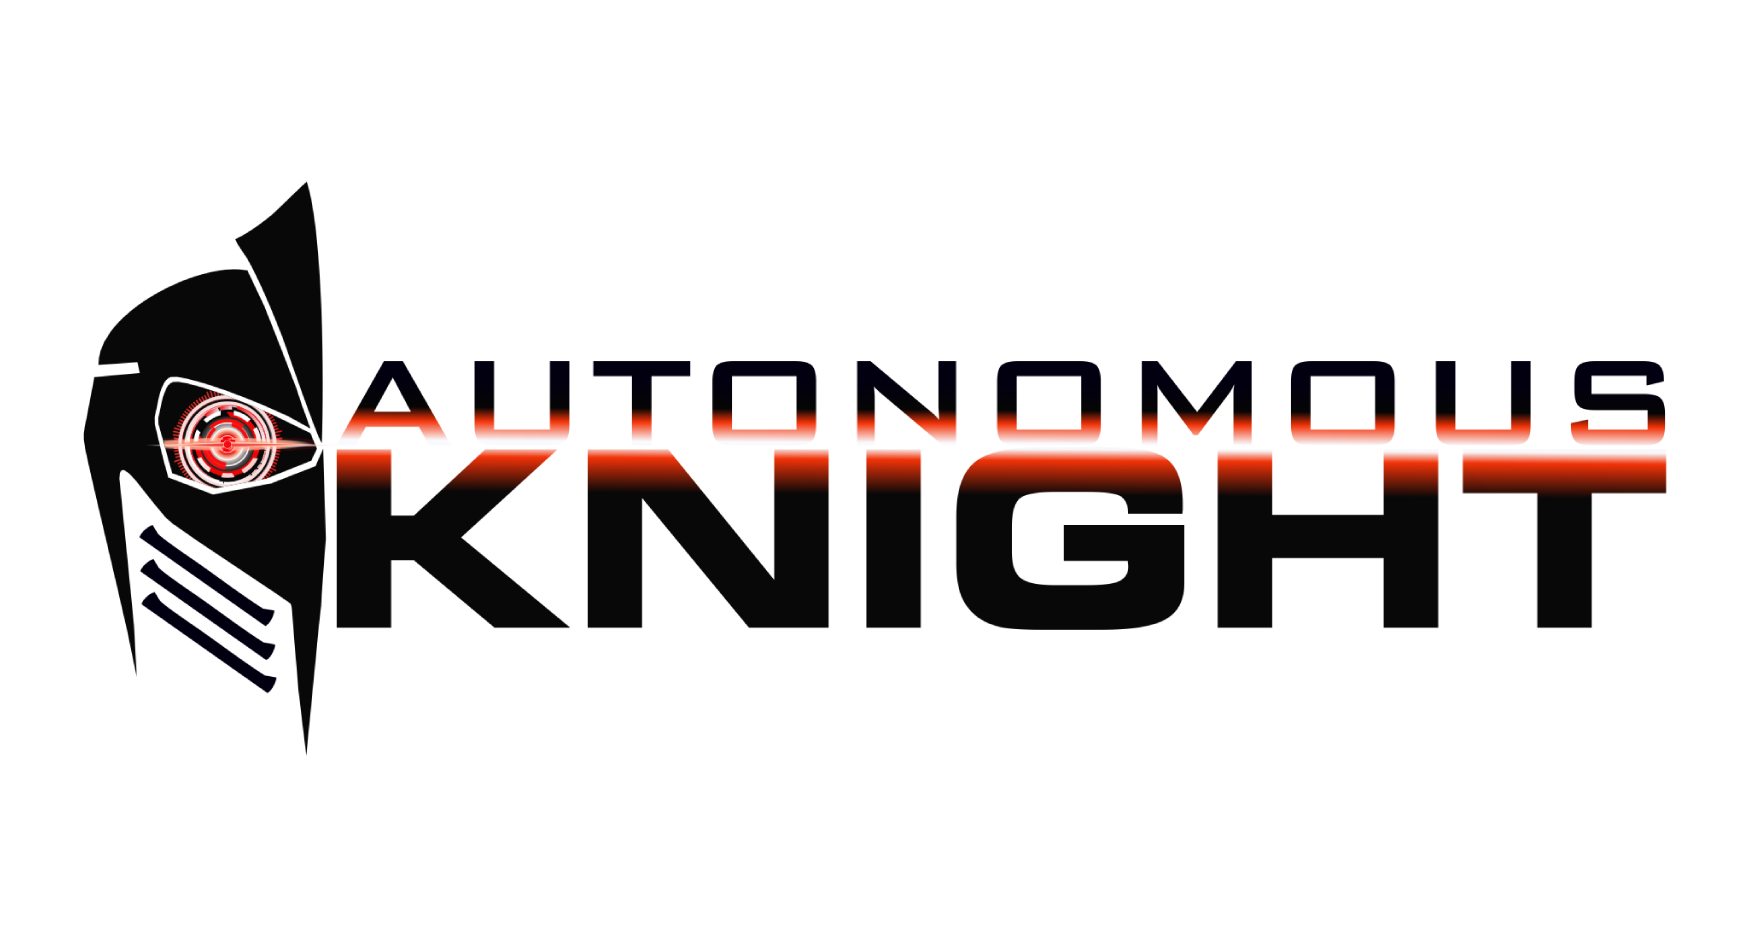 Network partner in the spotlight: Autonomous Knight